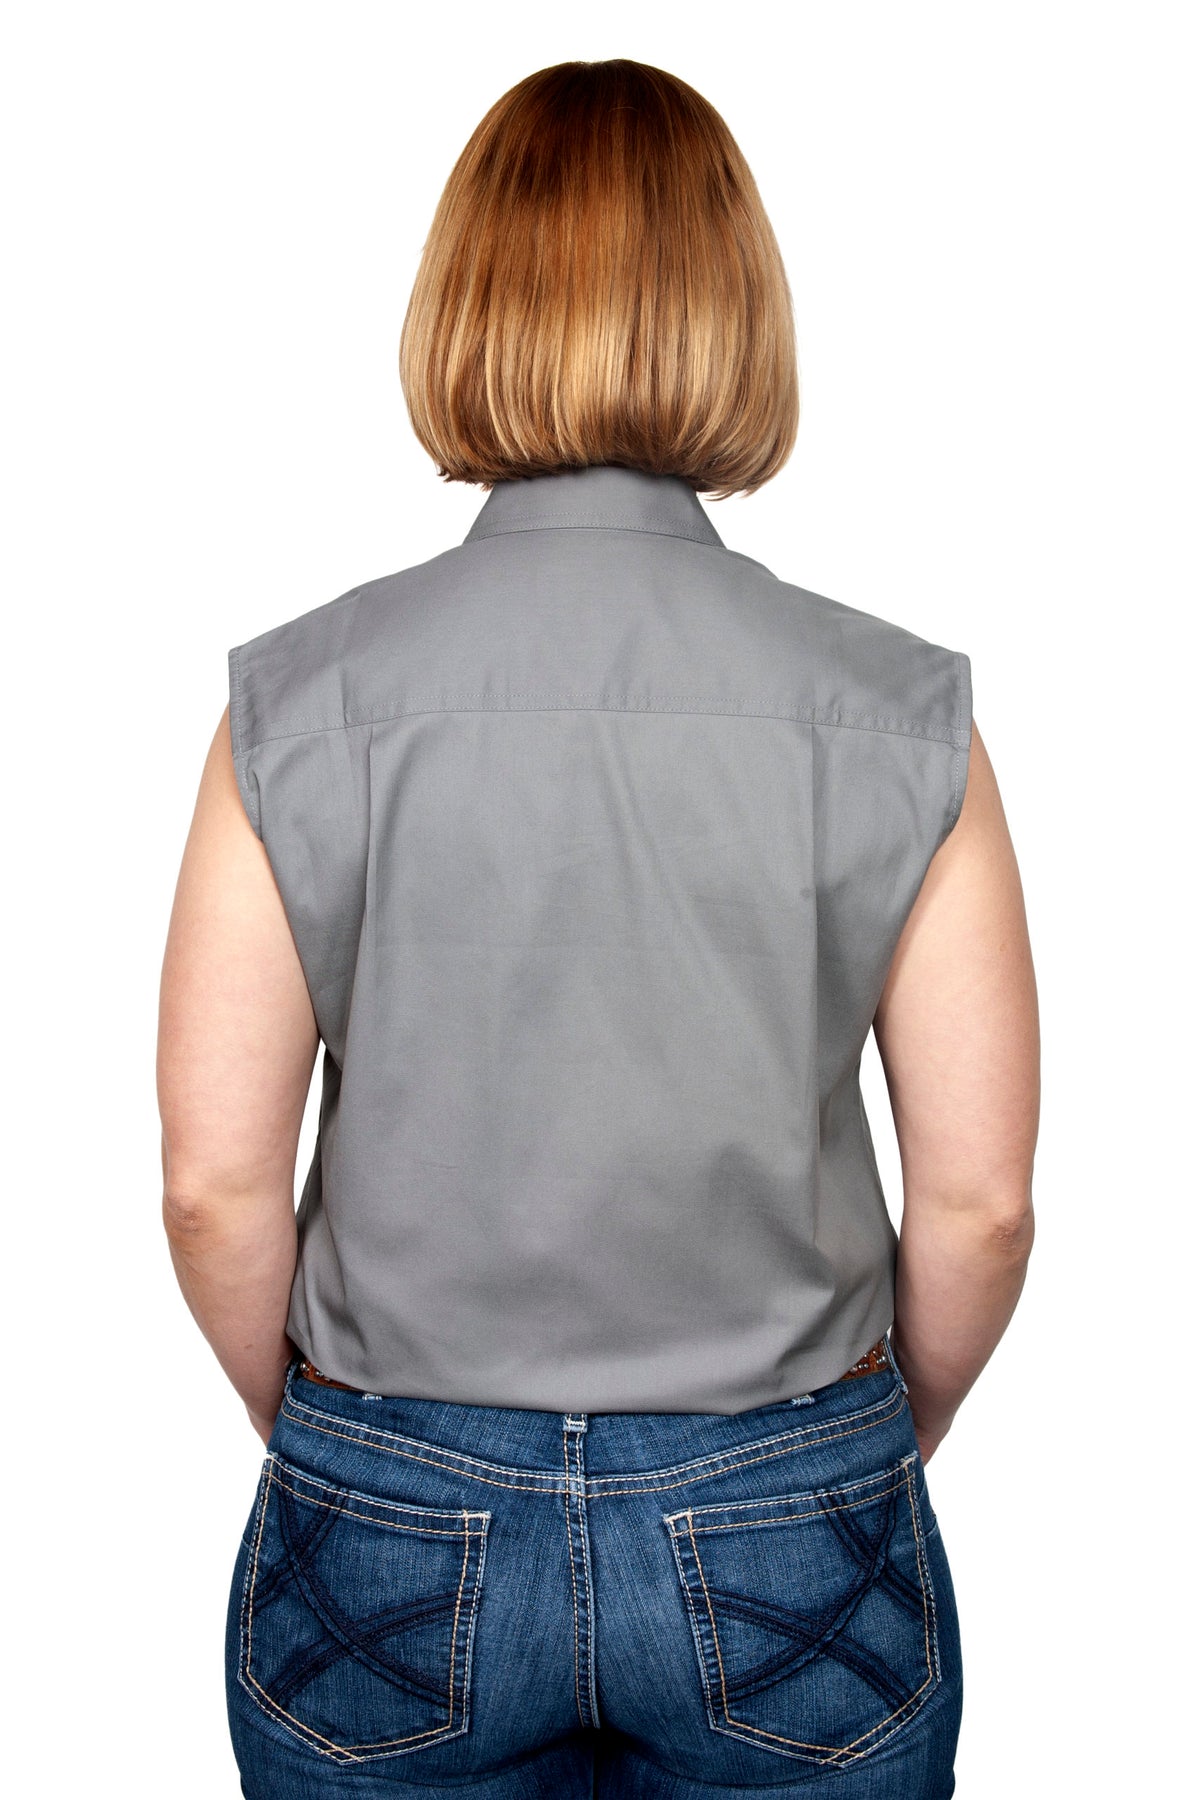 Just Country Womens Kerry Sleeveless Workshirt - Steel Grey